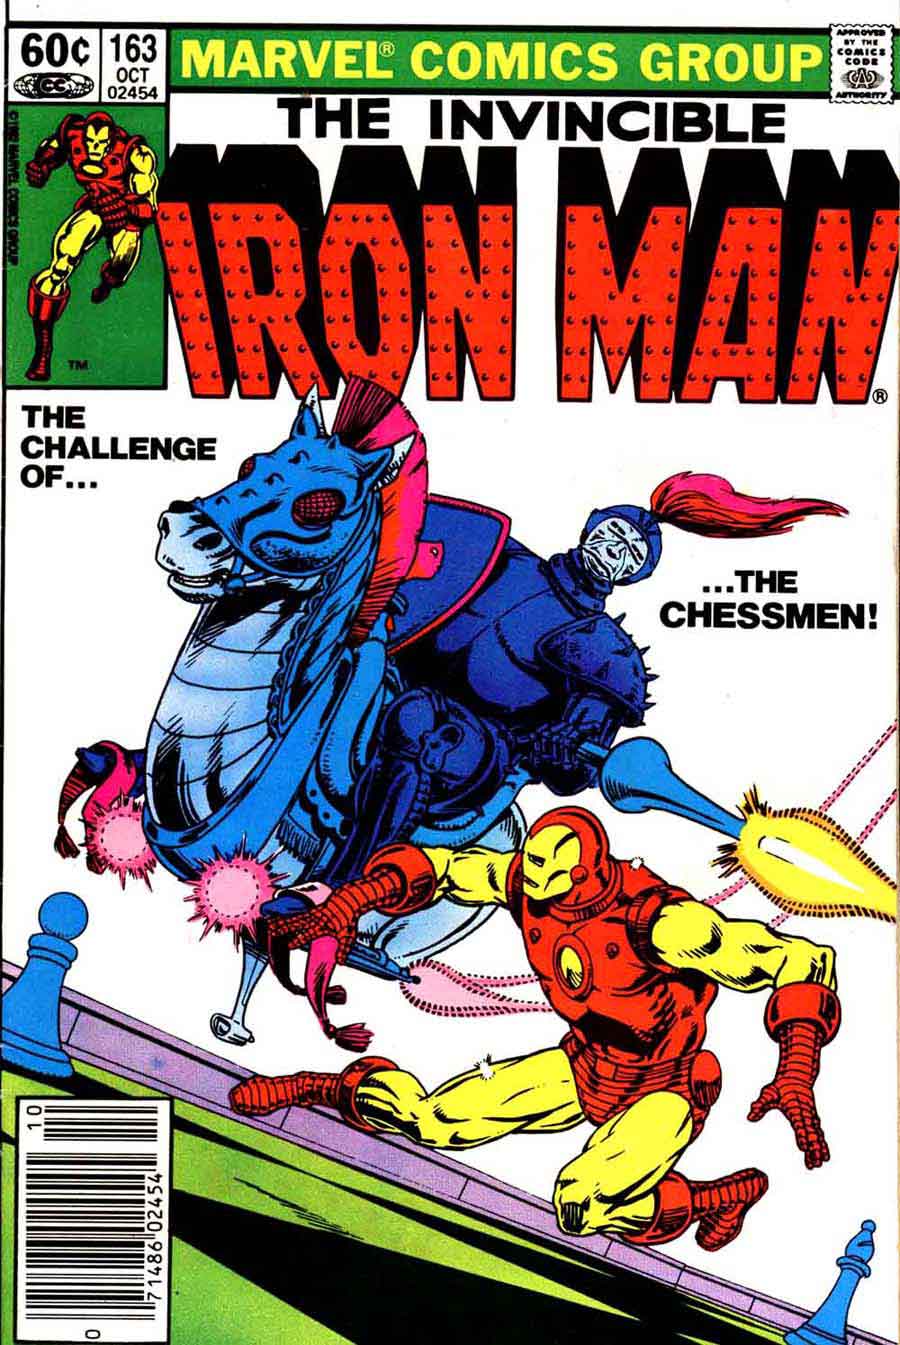 Iron Man v1 #163 marvel comic book cover art by Jim Starlin